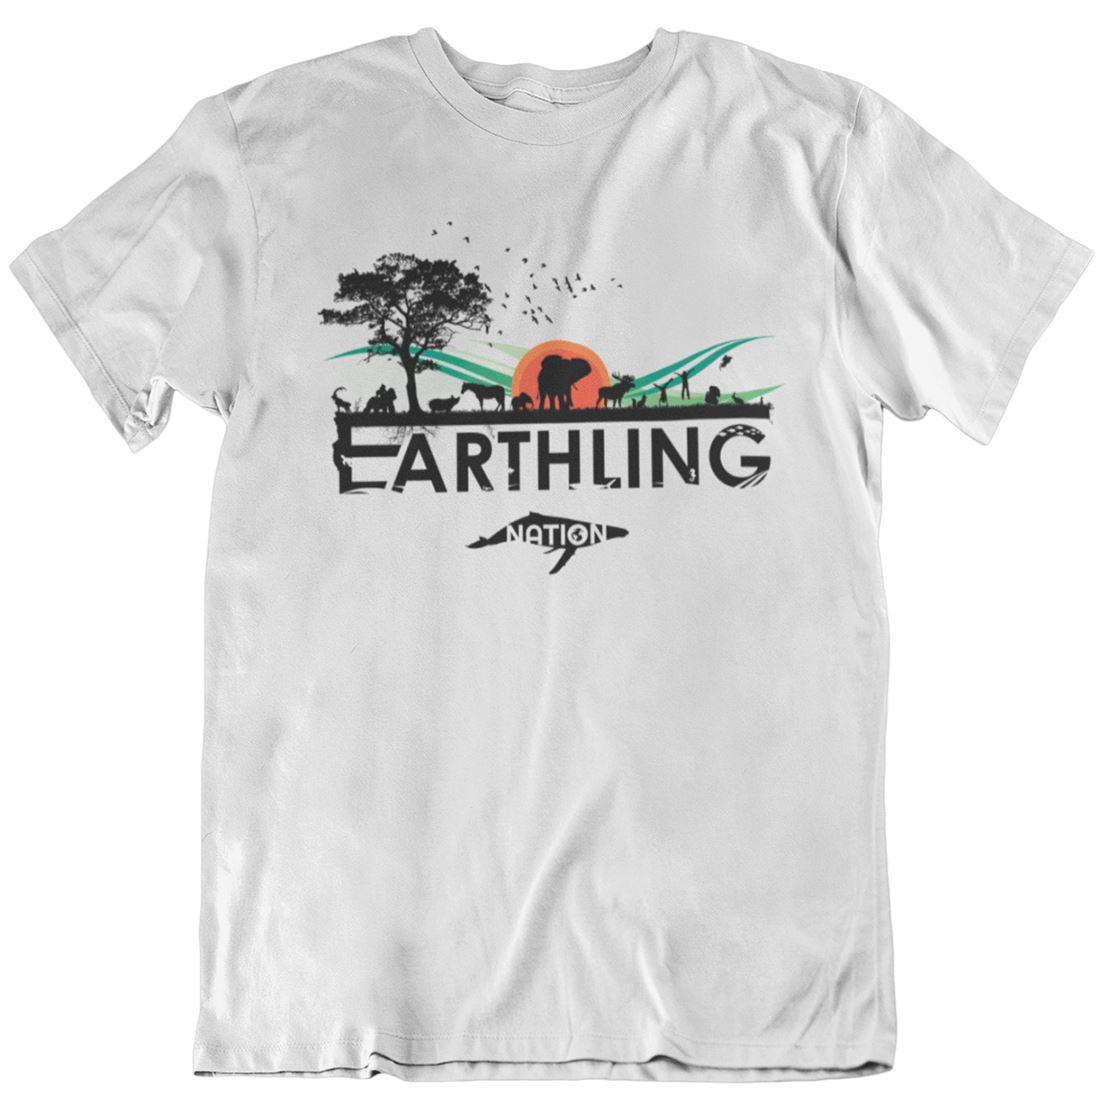 Earthling Nation - Unisex Organic Shirt - Team Vegan © vegan t shirt